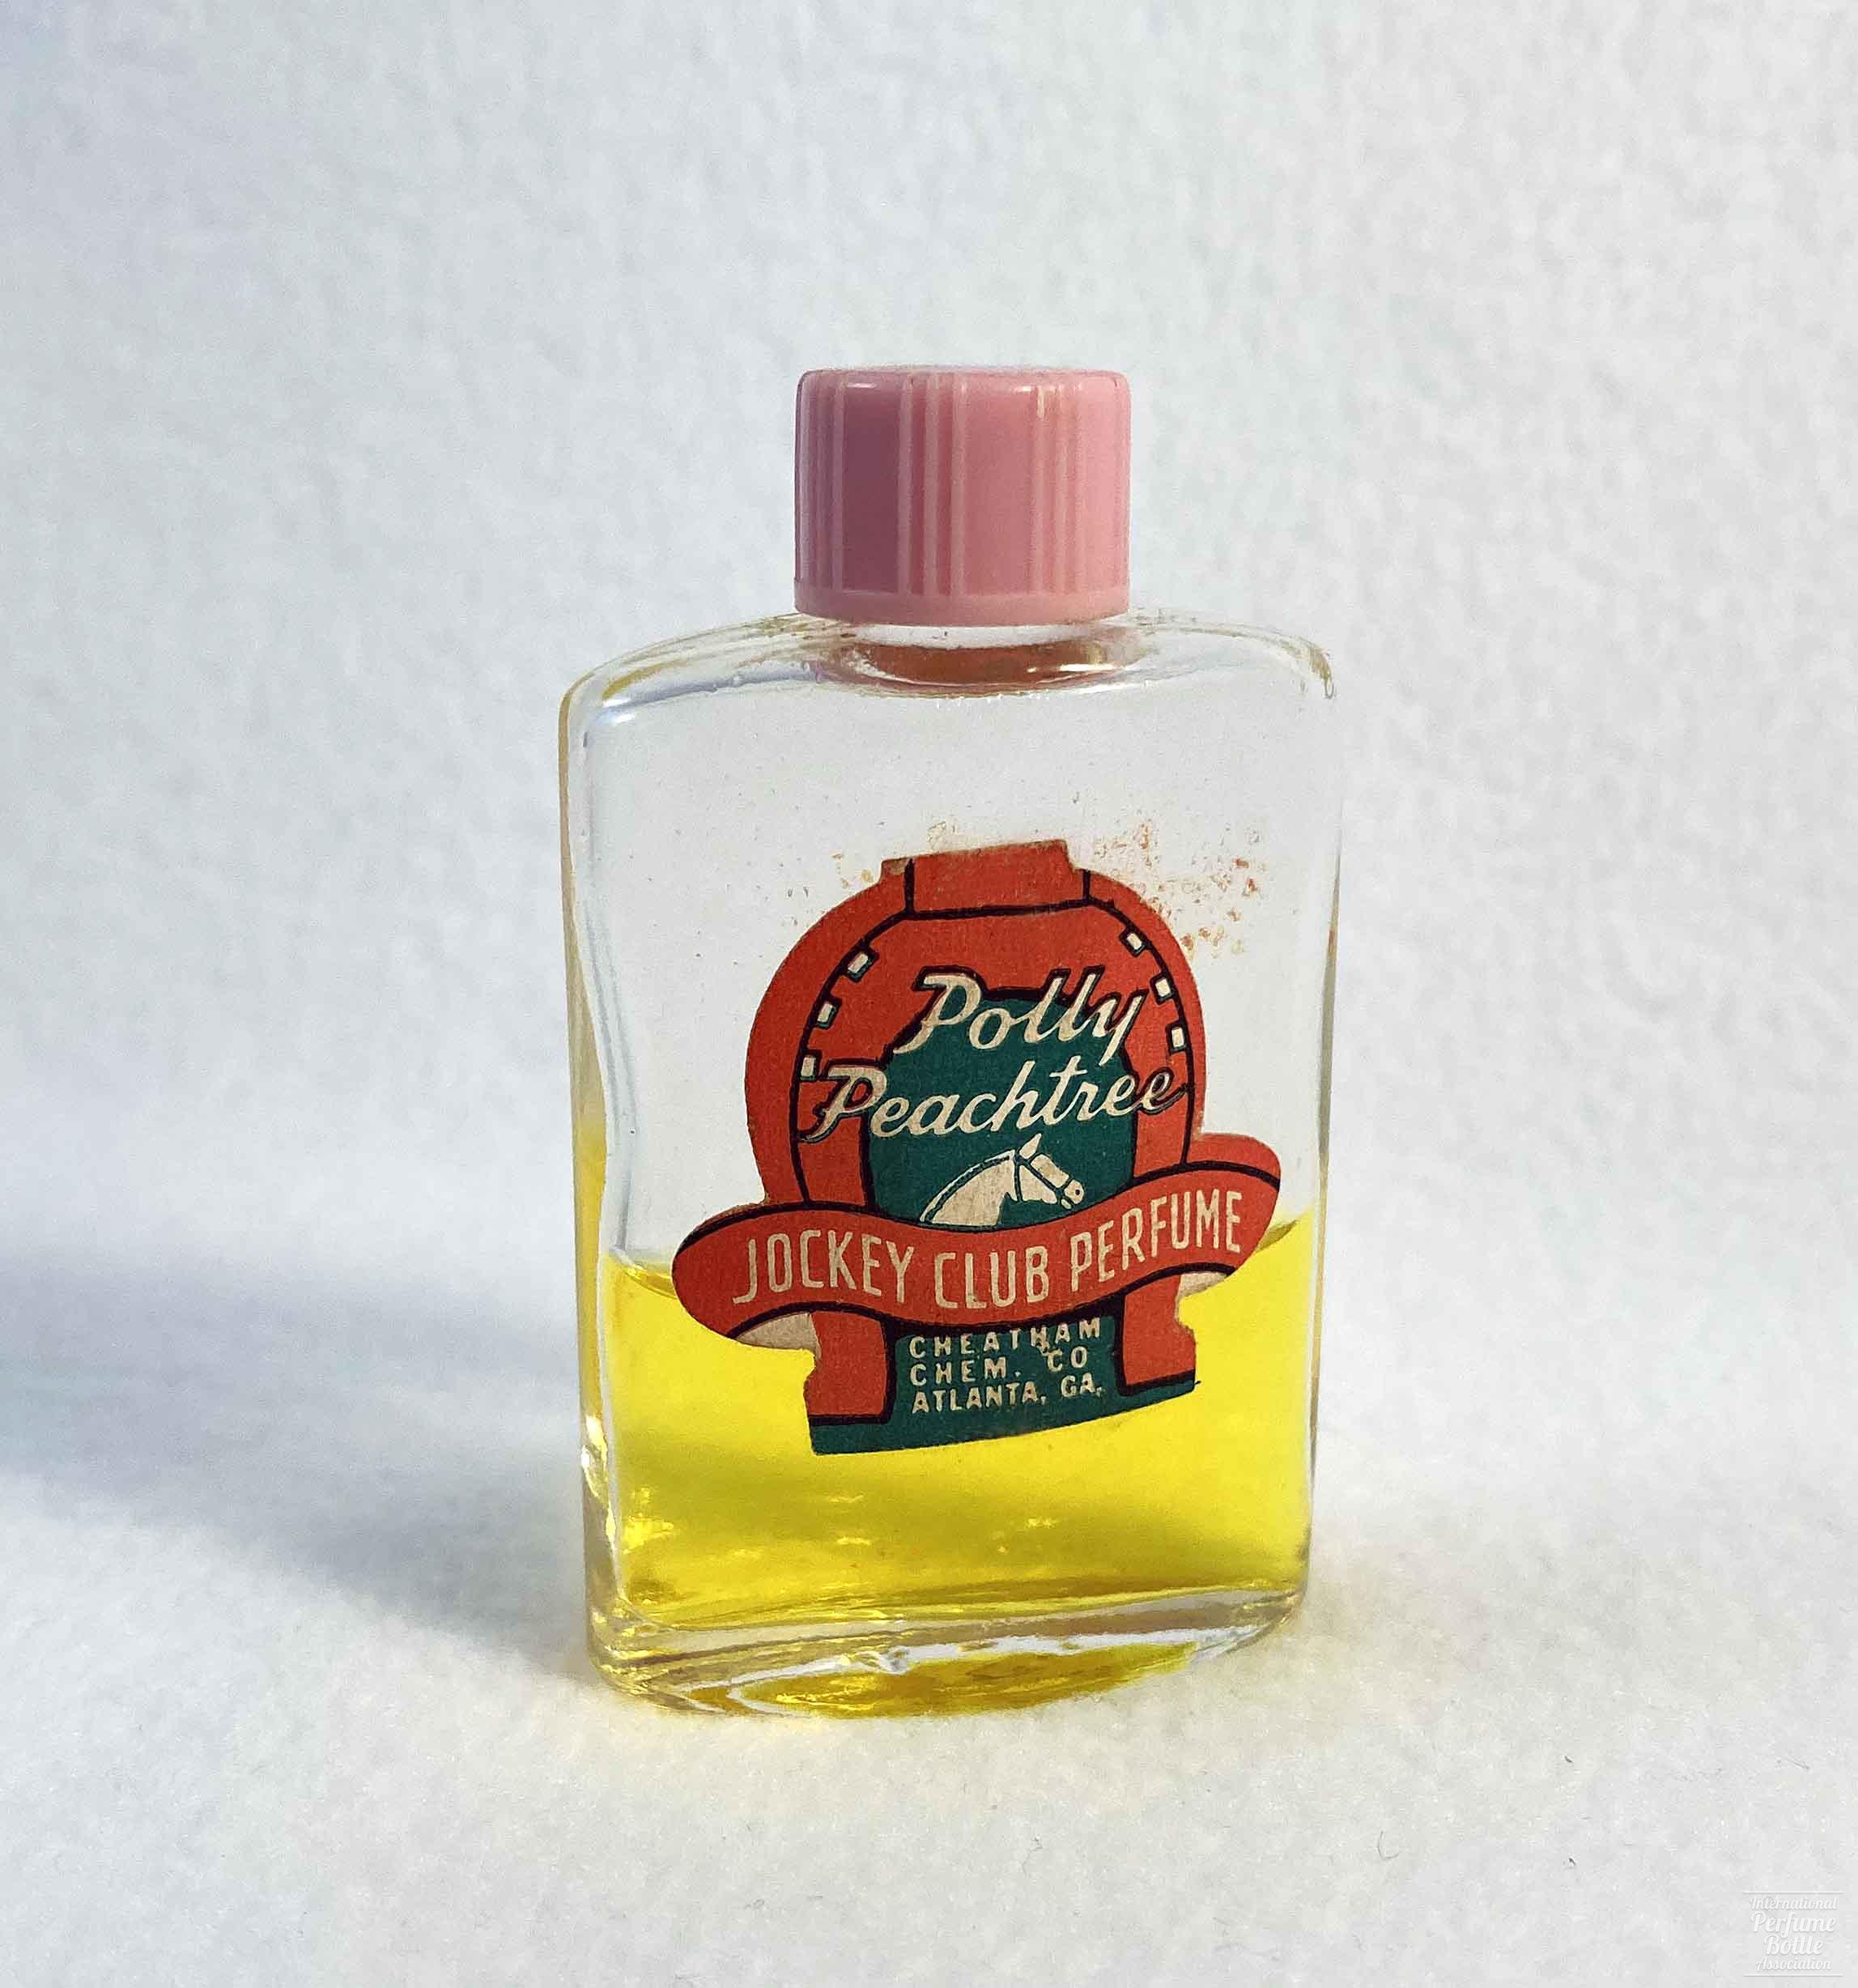 "Polly Peachtree Jockey Club Perfume" by Cheatham Chemical Co.